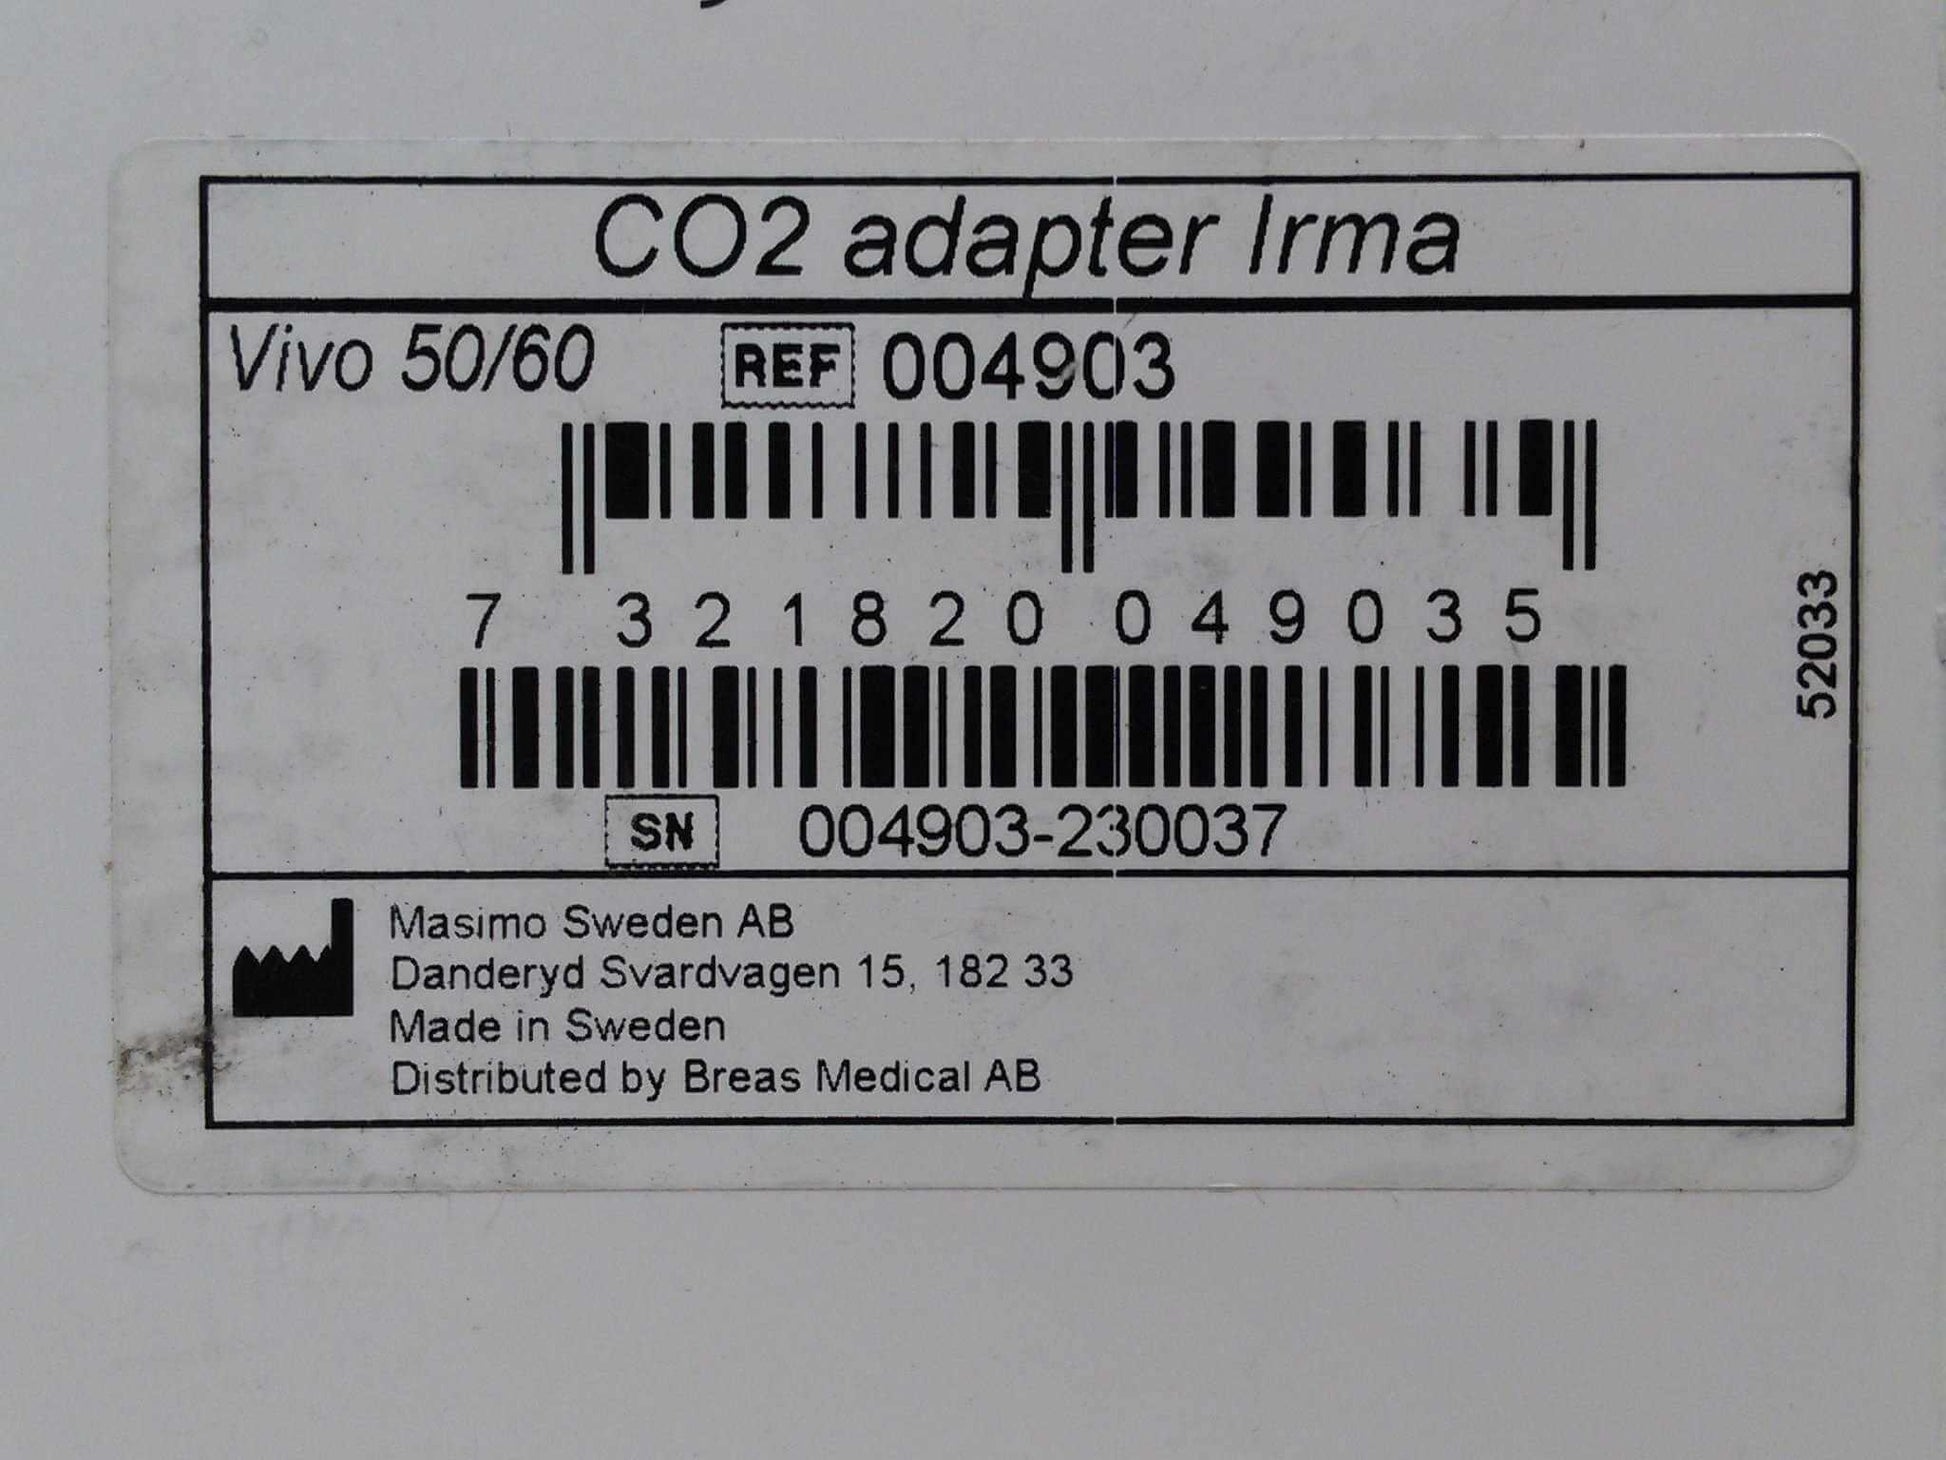 NEW Masimo IRMA CO2 Multigas Analyzer 200105 Breas HDM Vivo 50/60 004903 Warranty FREE Shipping - MBR Medicals